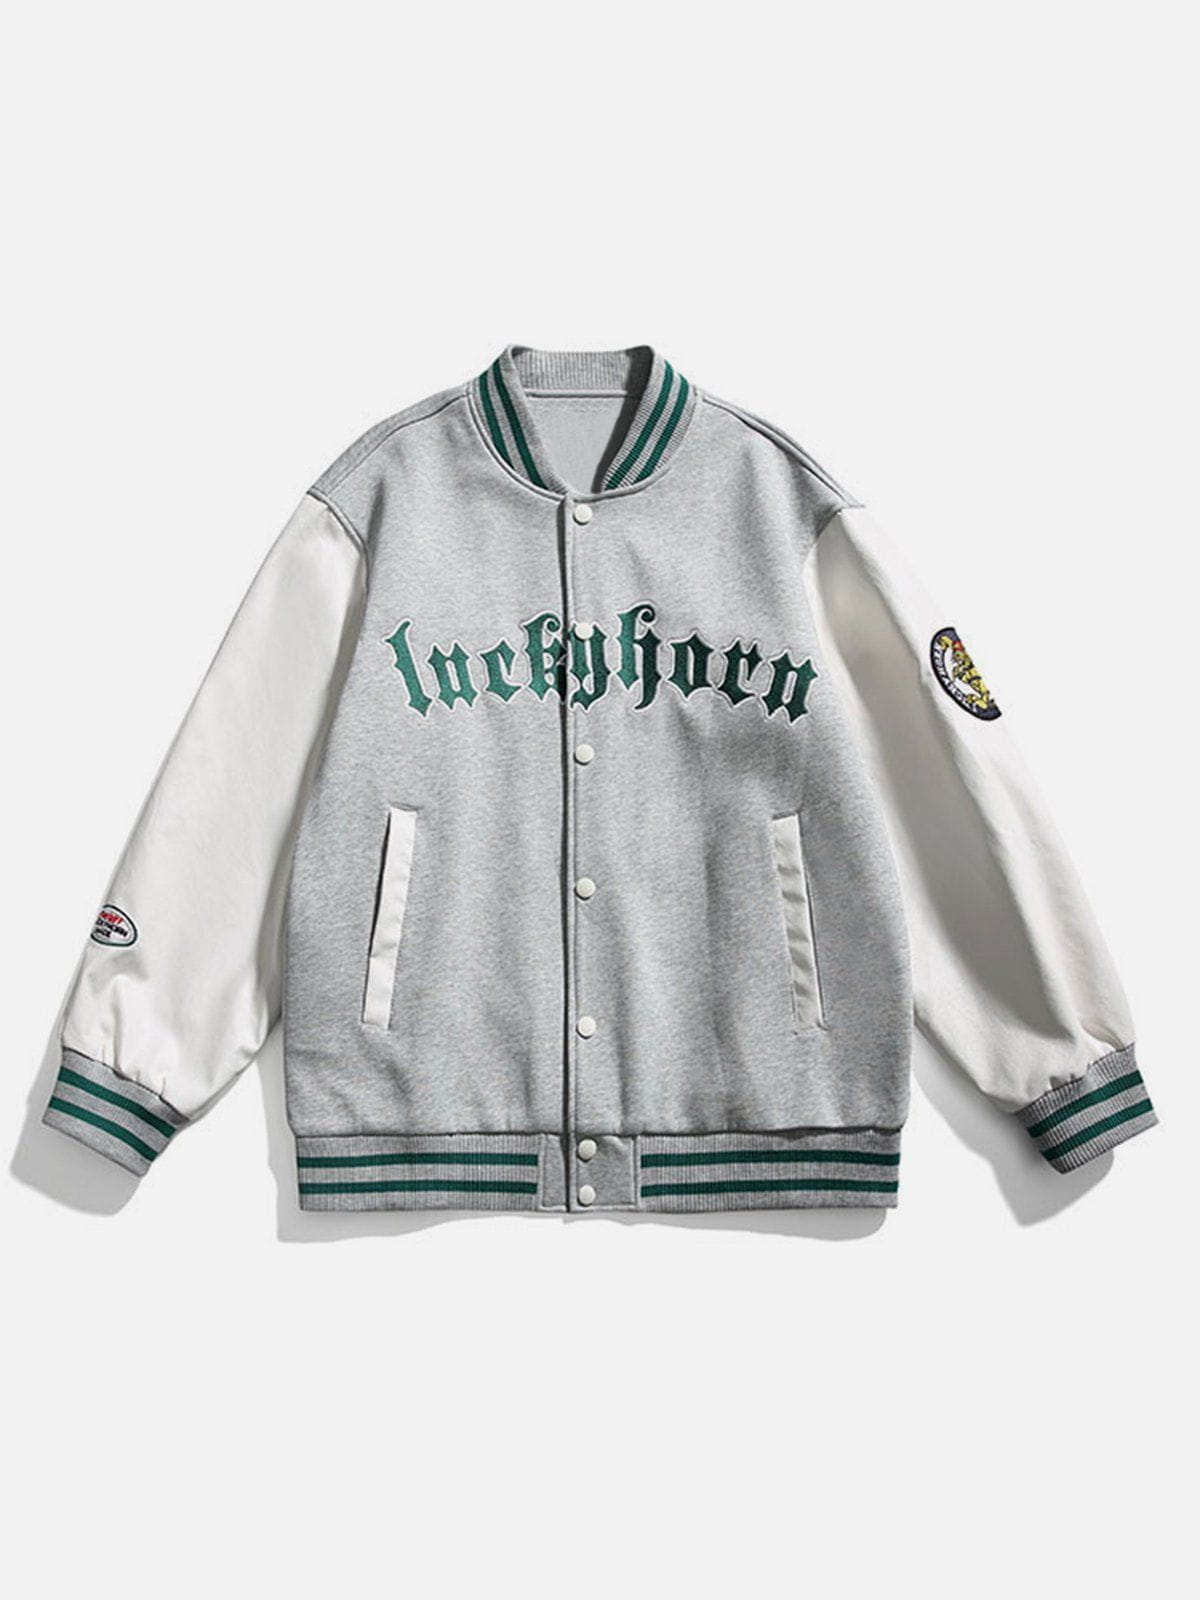 Majesda® - Patchwork "Luckyhorn" Varsity Jackets outfit ideas, streetwear fashion - majesda.com